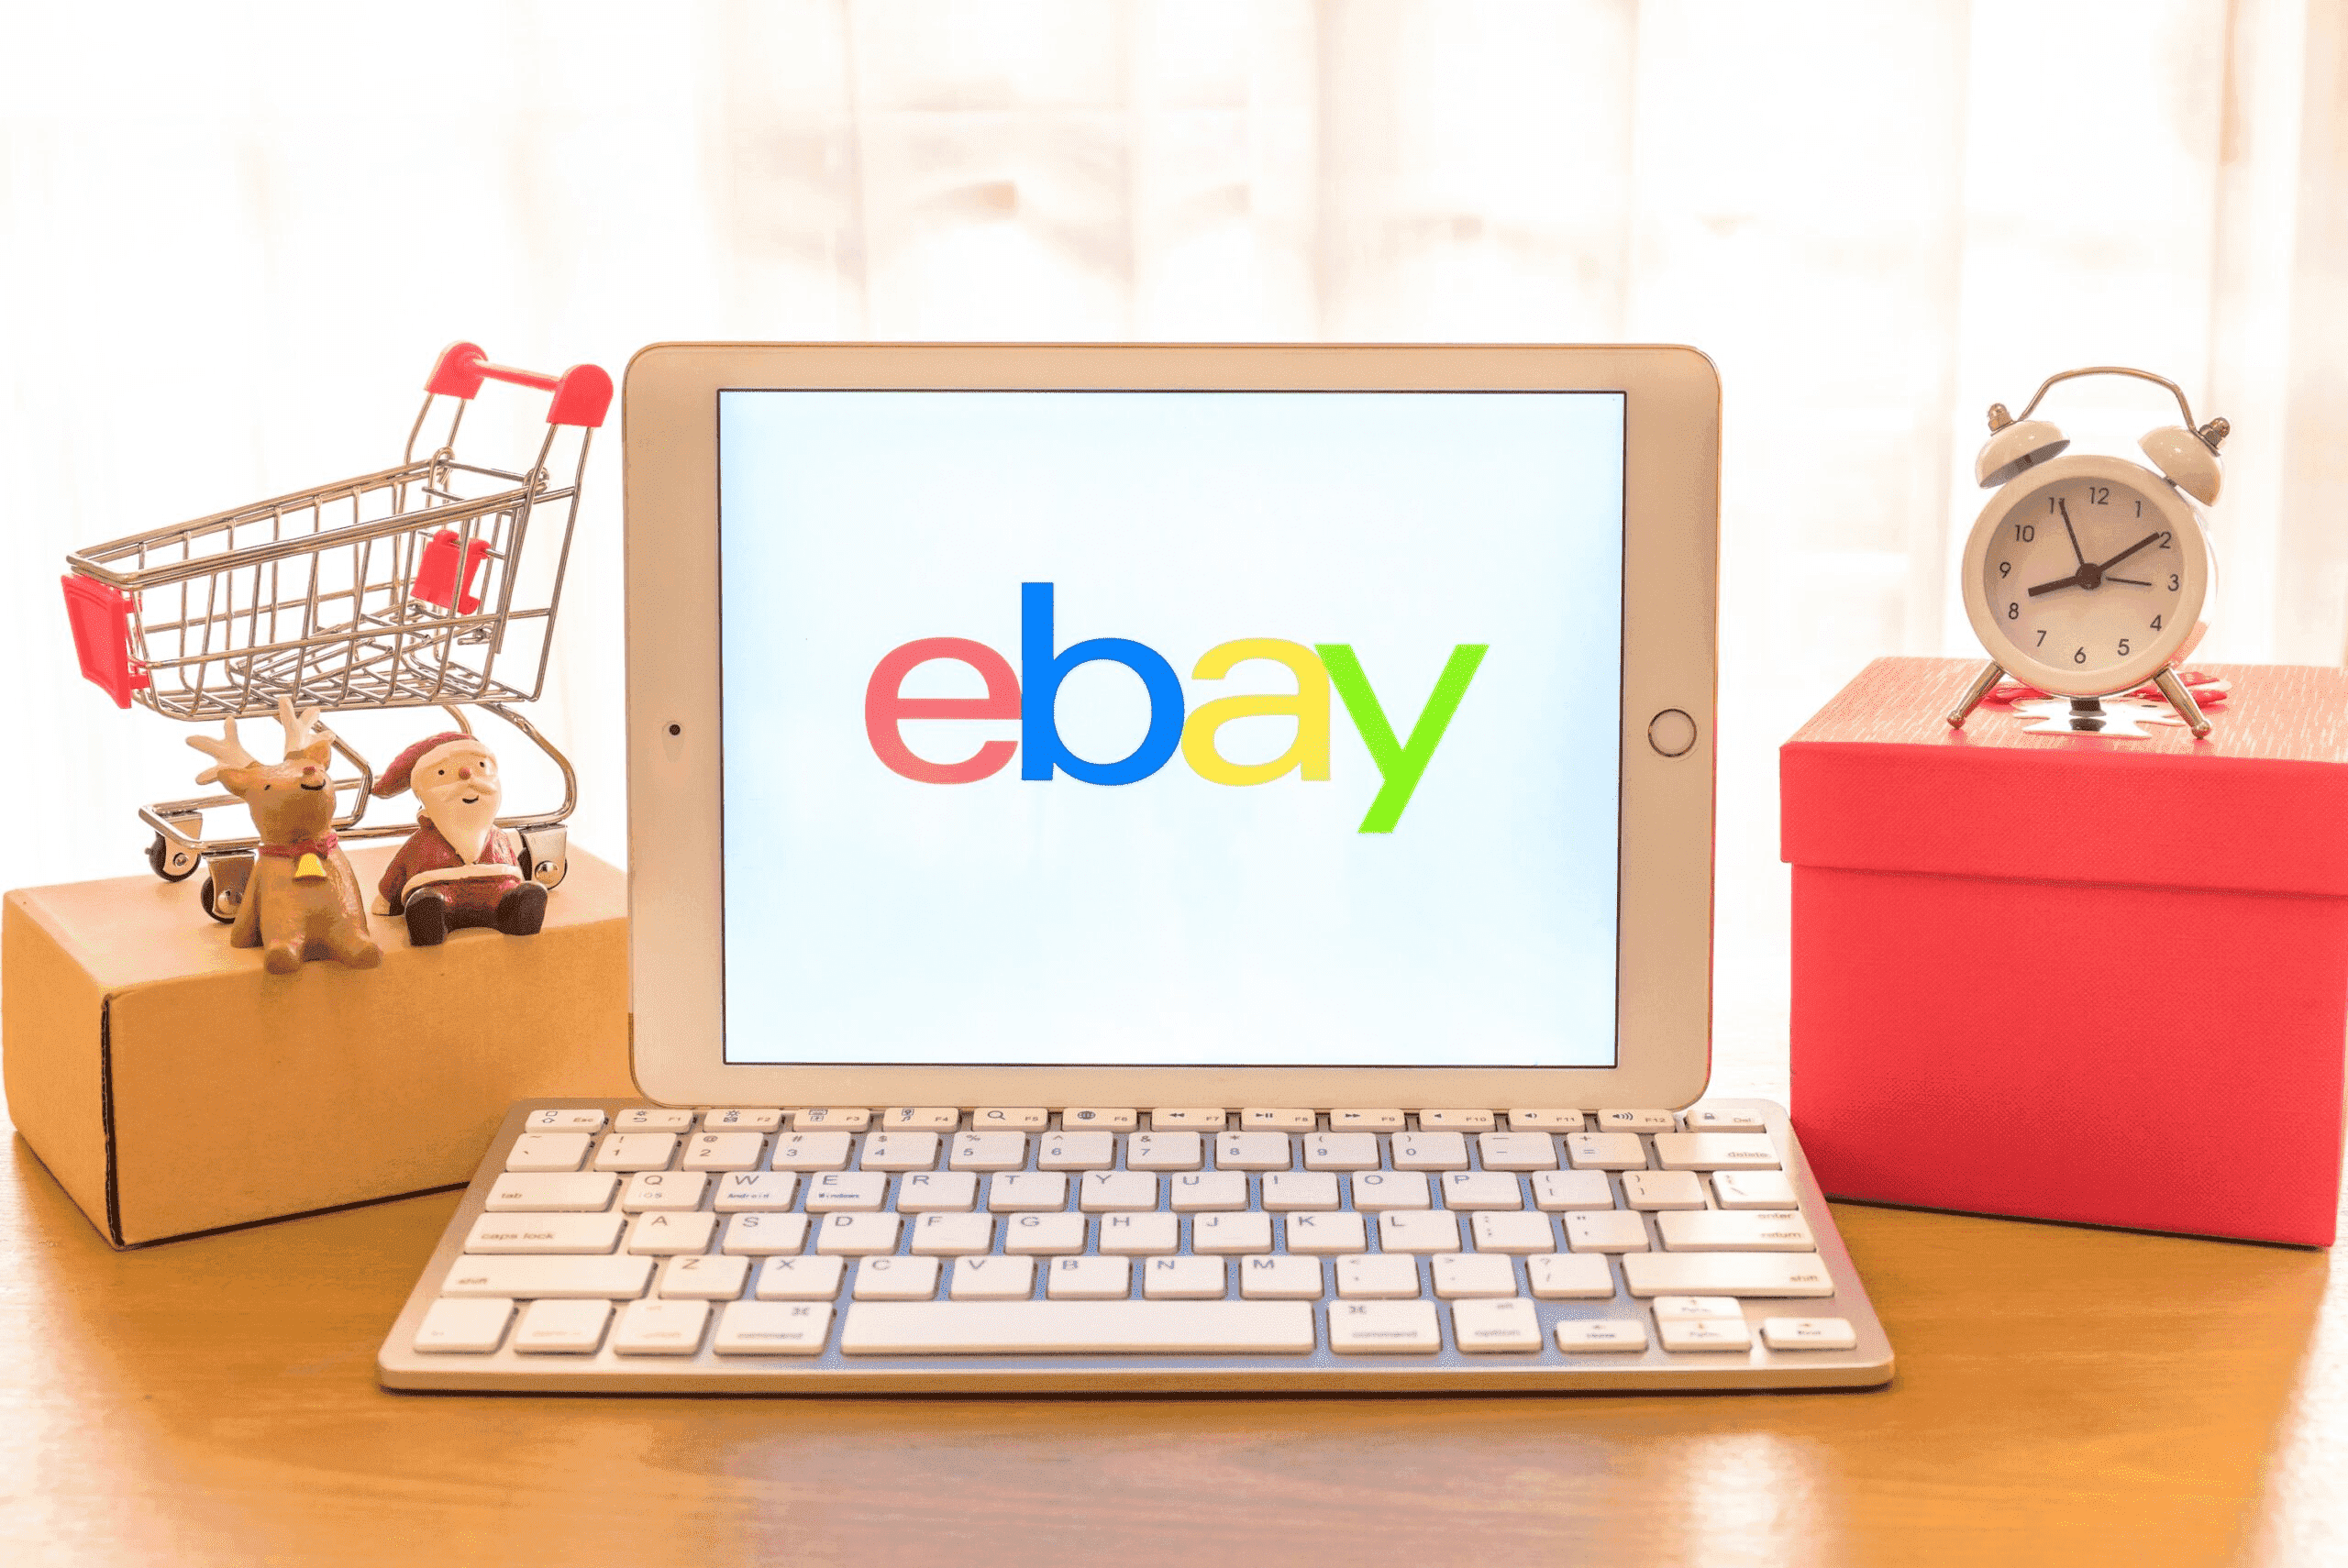 Ebay Reply Ebay Com